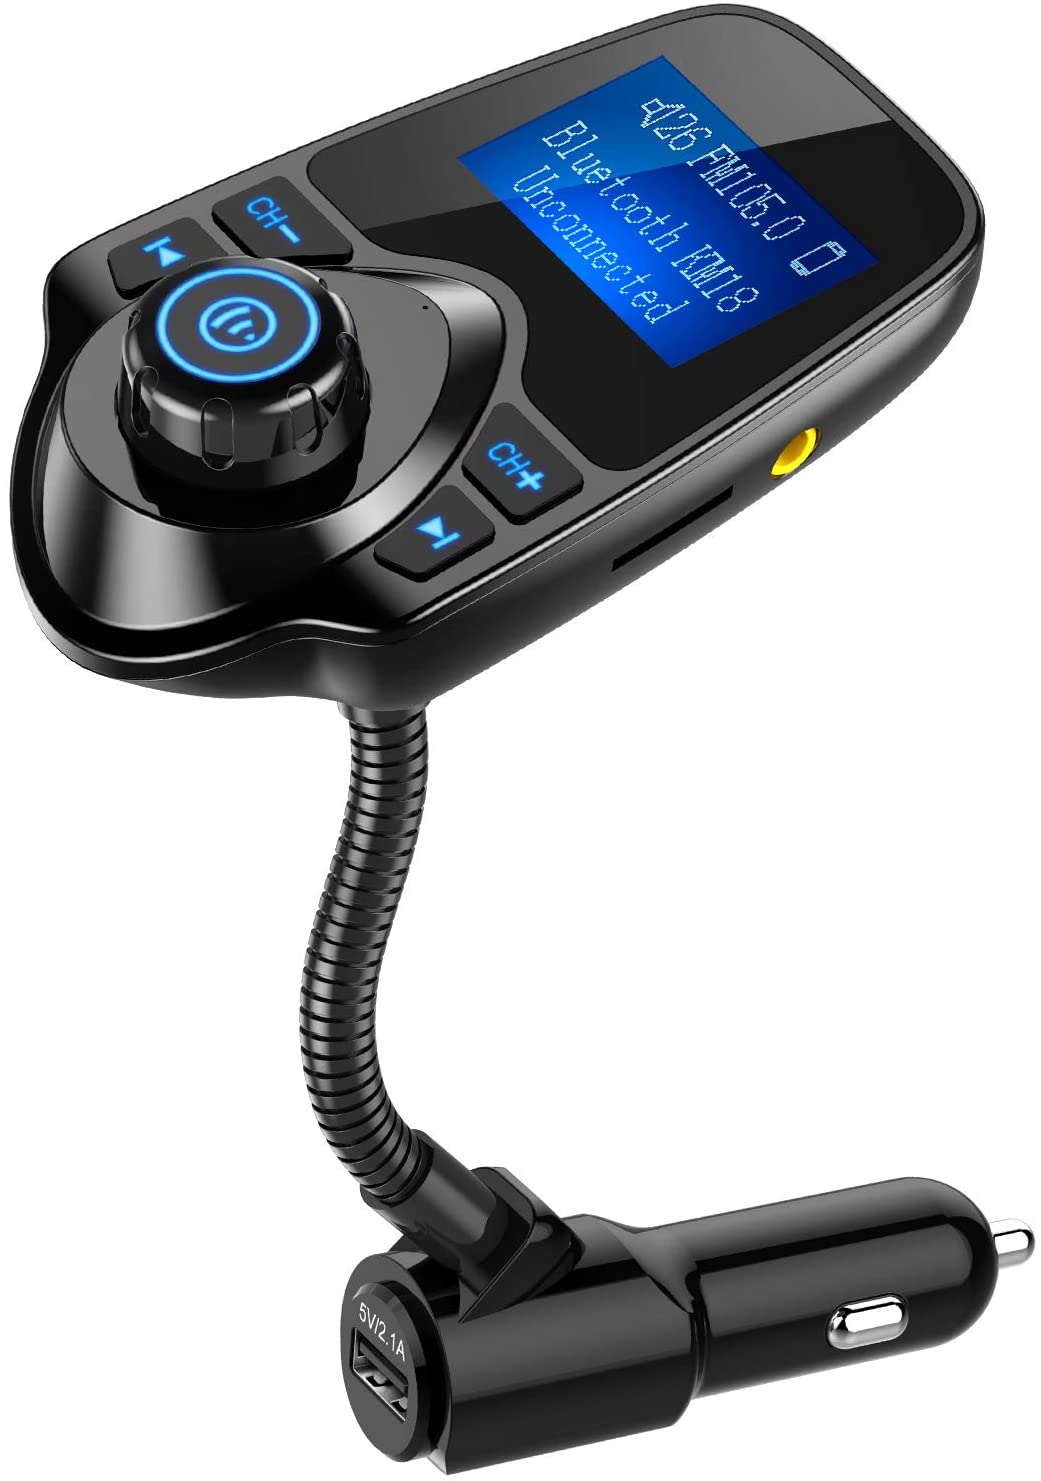 Nulaxy Bluetooth Car FM Transmitter Audio Adapter Receiver Wireless Hands Free Car Kit W 1.44 Inch Display - KM18 Black (Single)